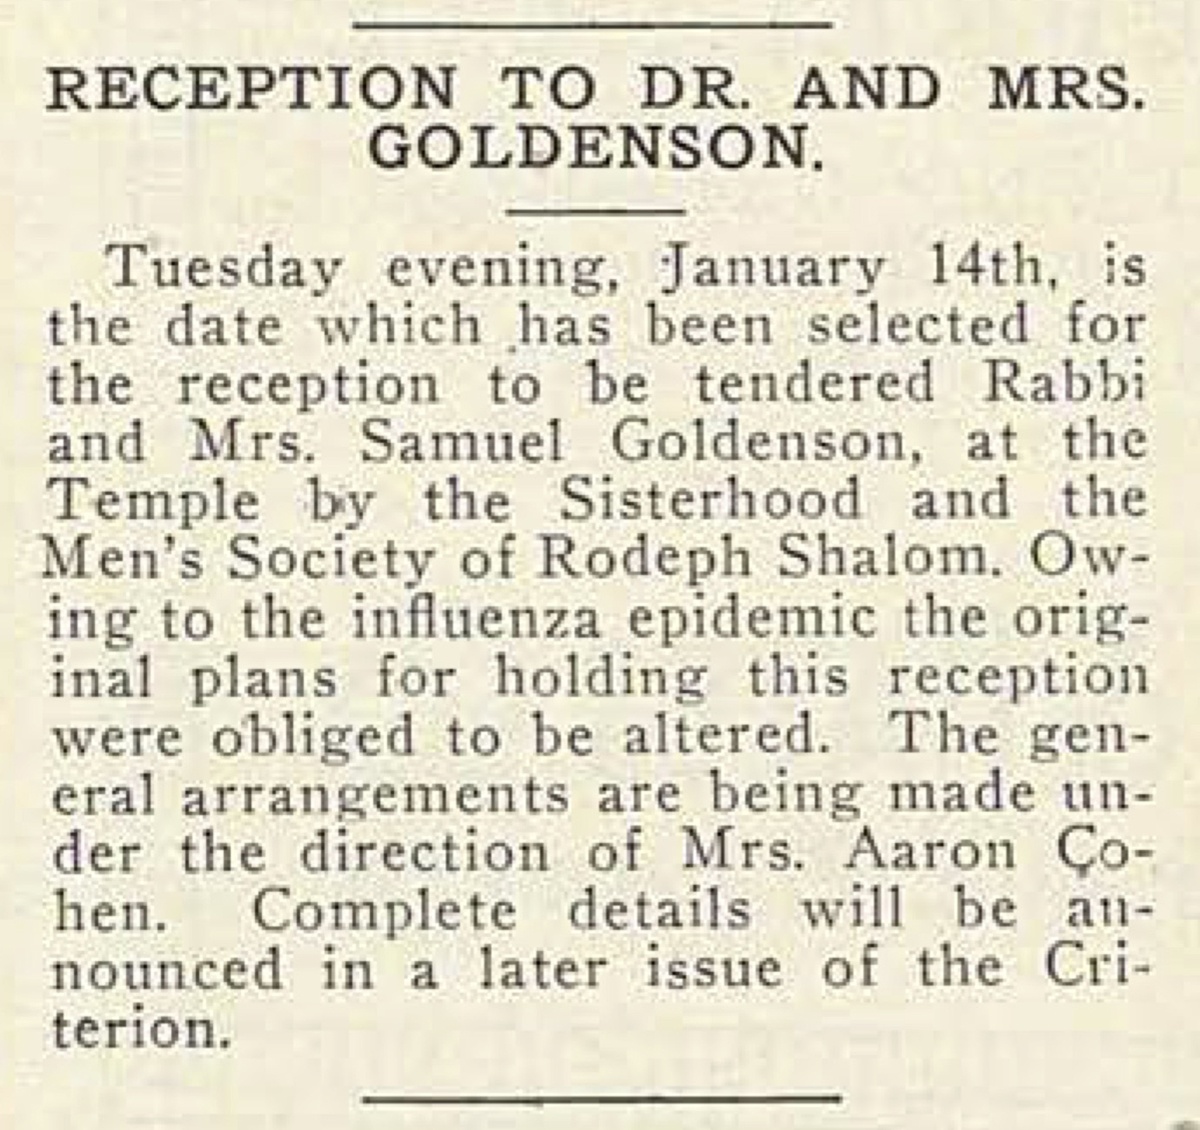 Jewish Criterion, Dec. 20, 1918